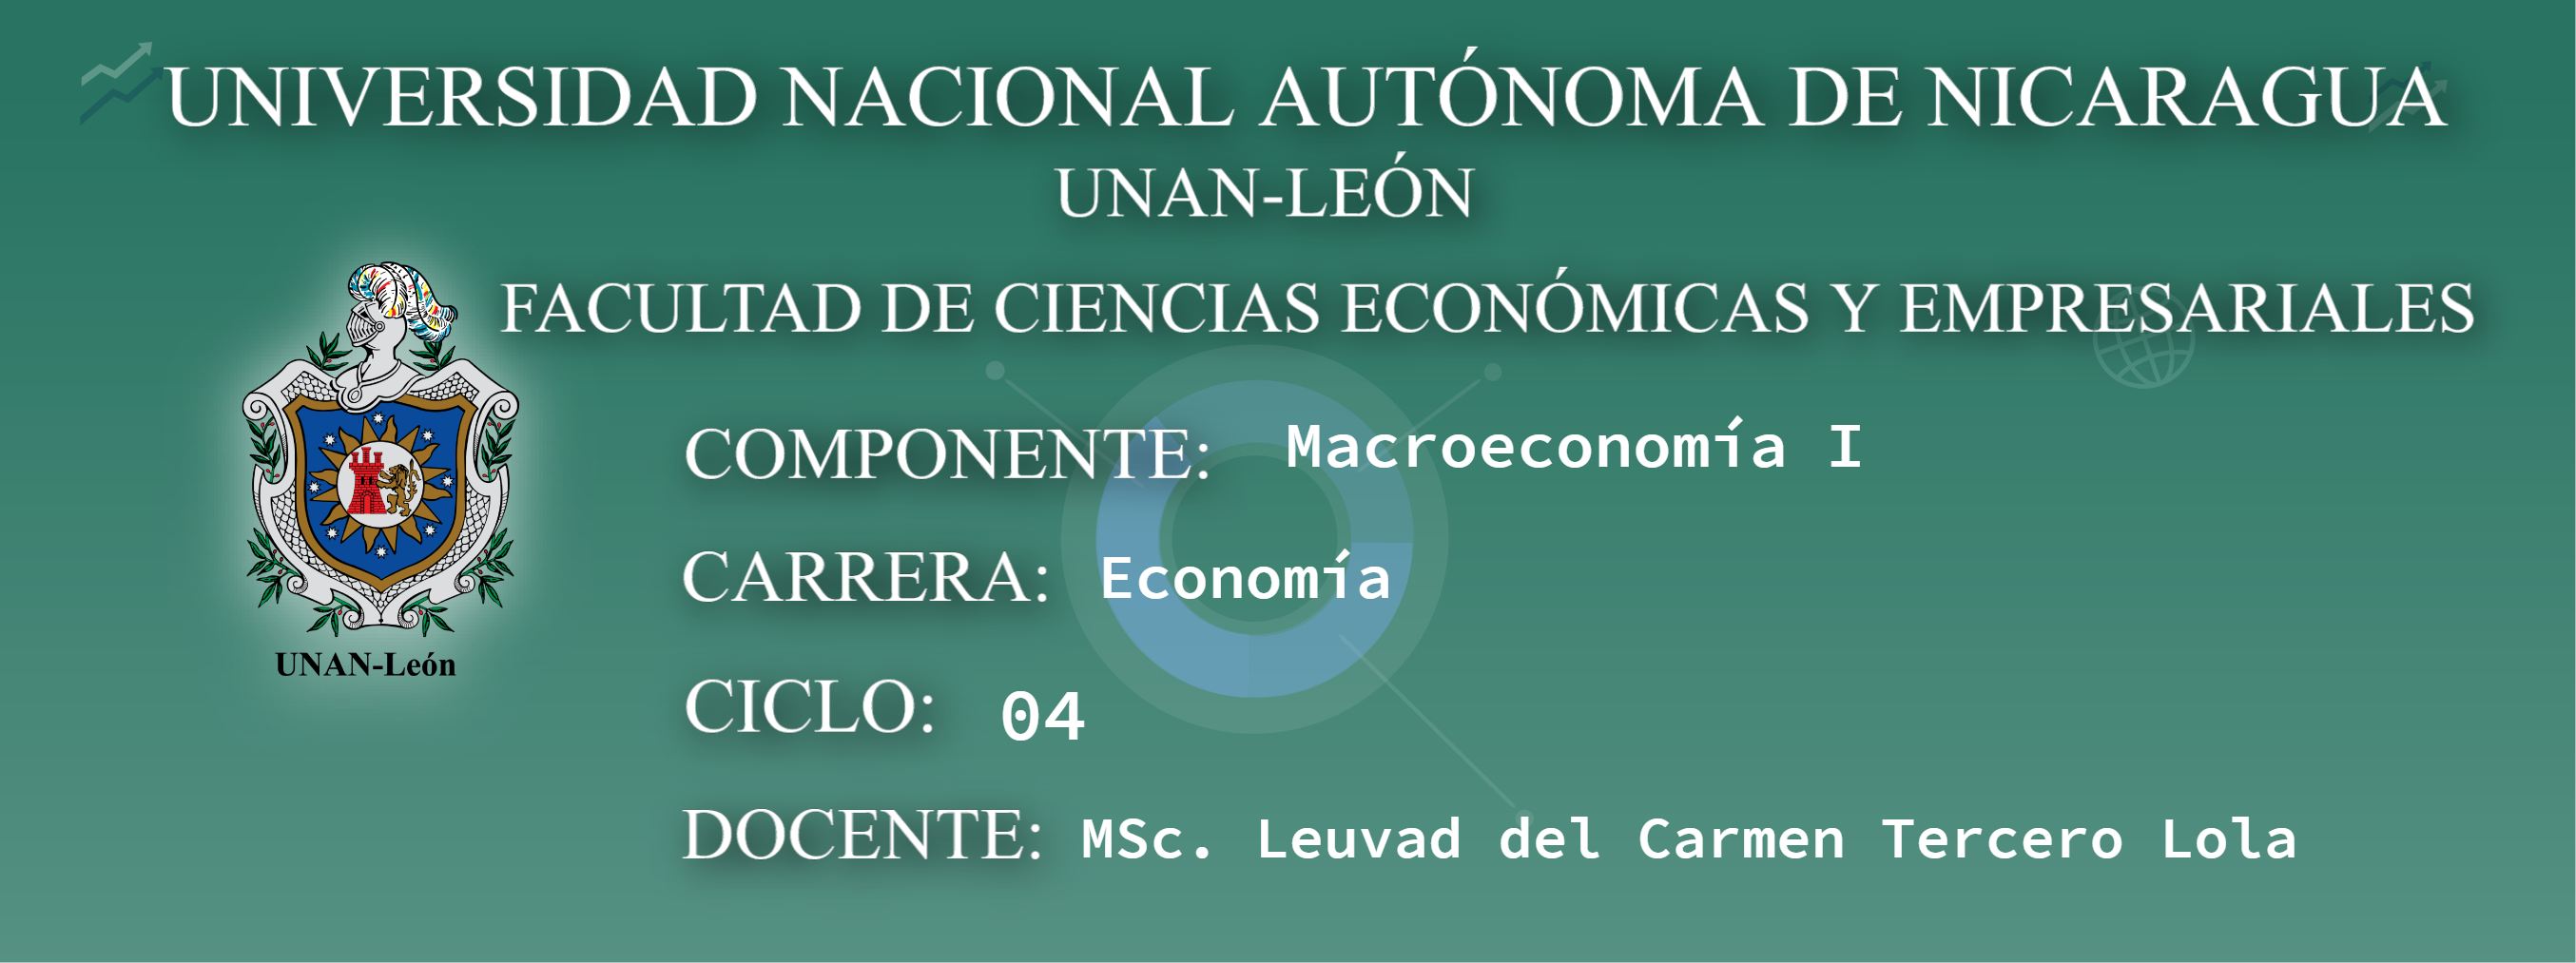 Macroeconomía I 